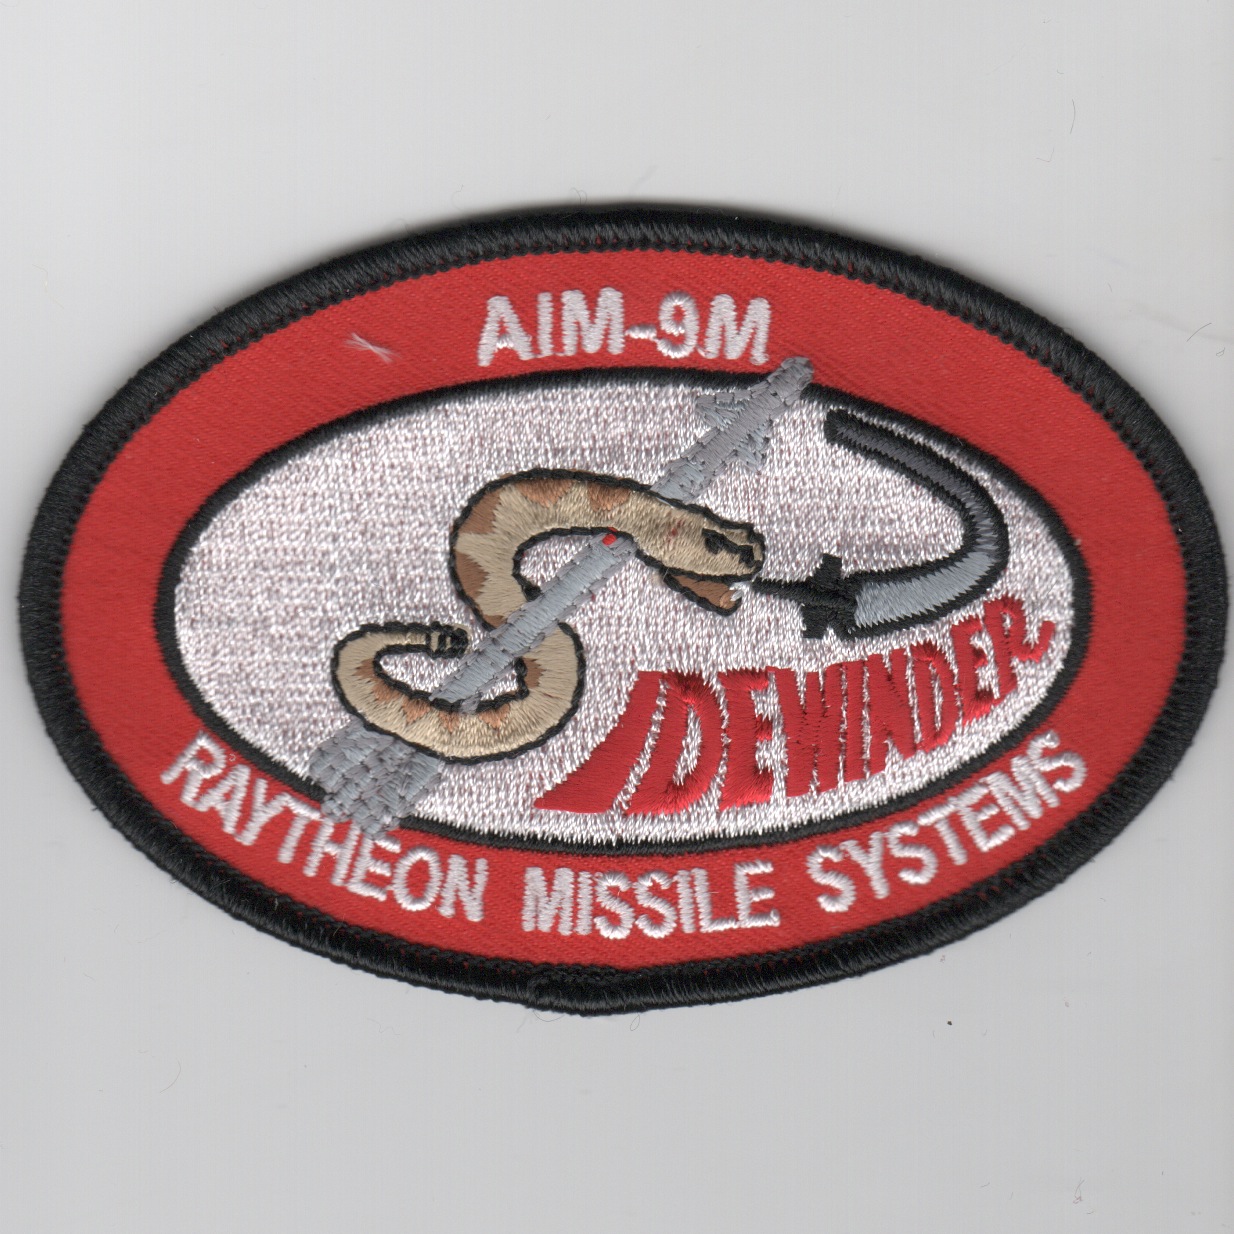 AIM-9M RMS Patch